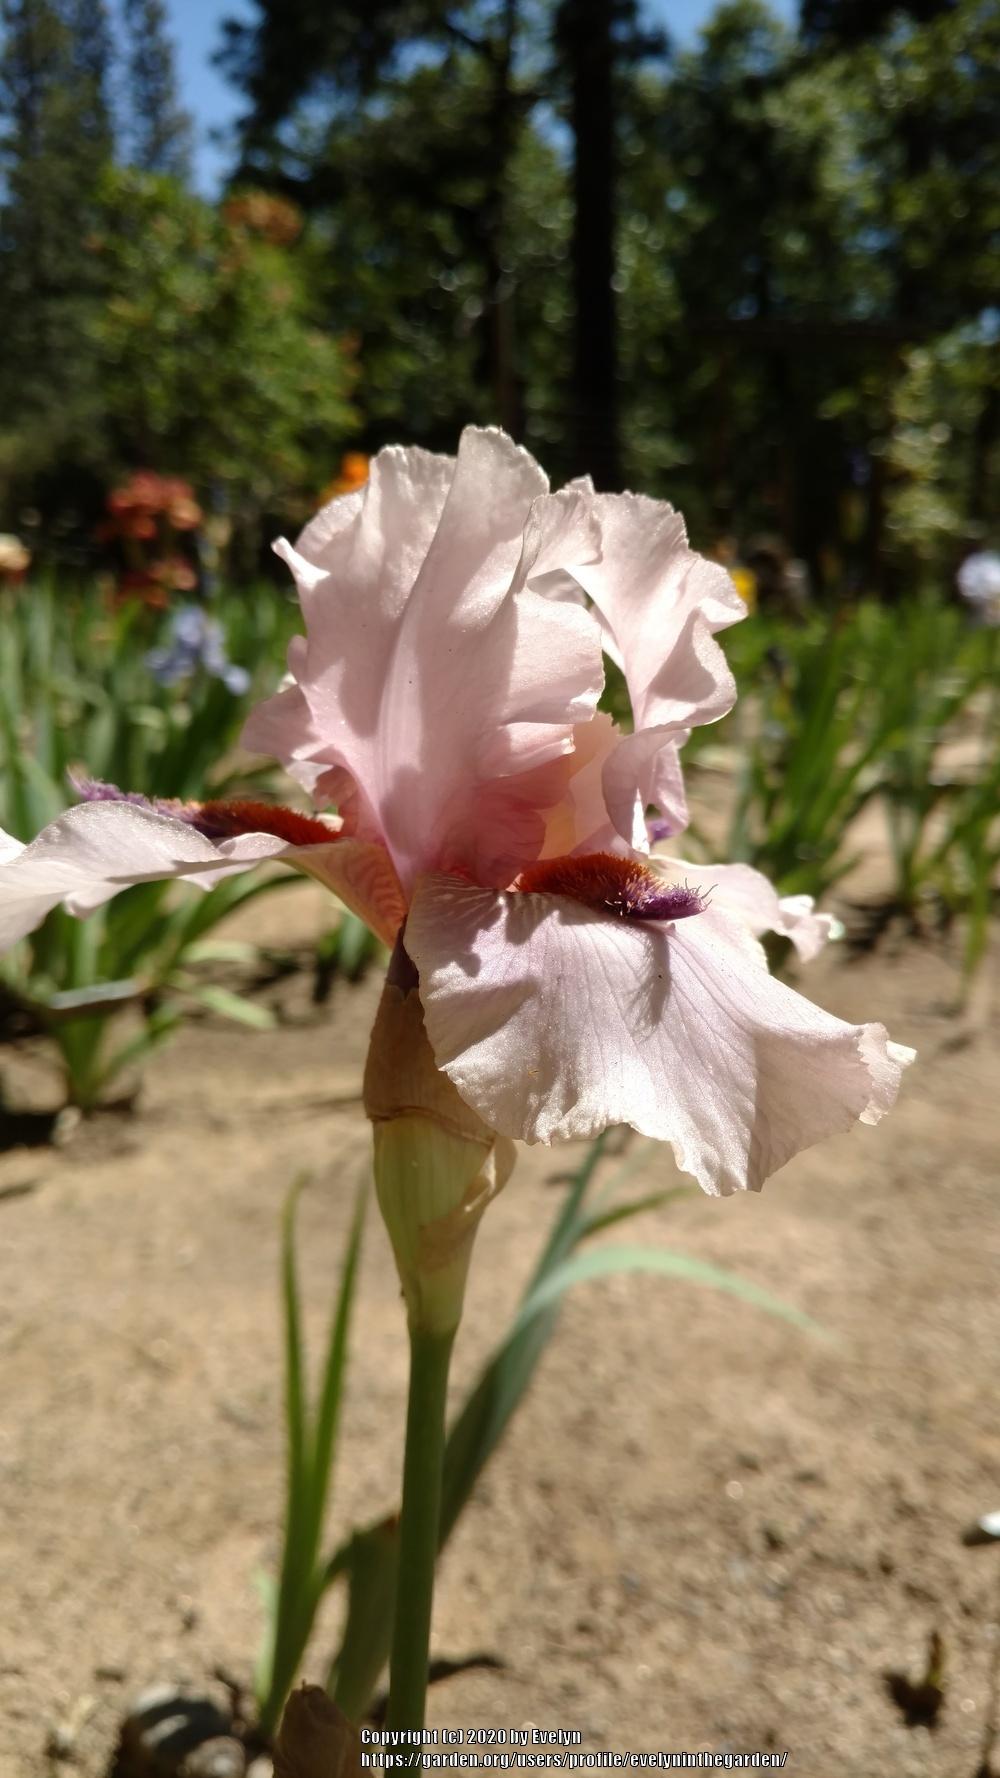 Photo of Tall Bearded Iris (Iris 'Awesome Alex') uploaded by evelyninthegarden